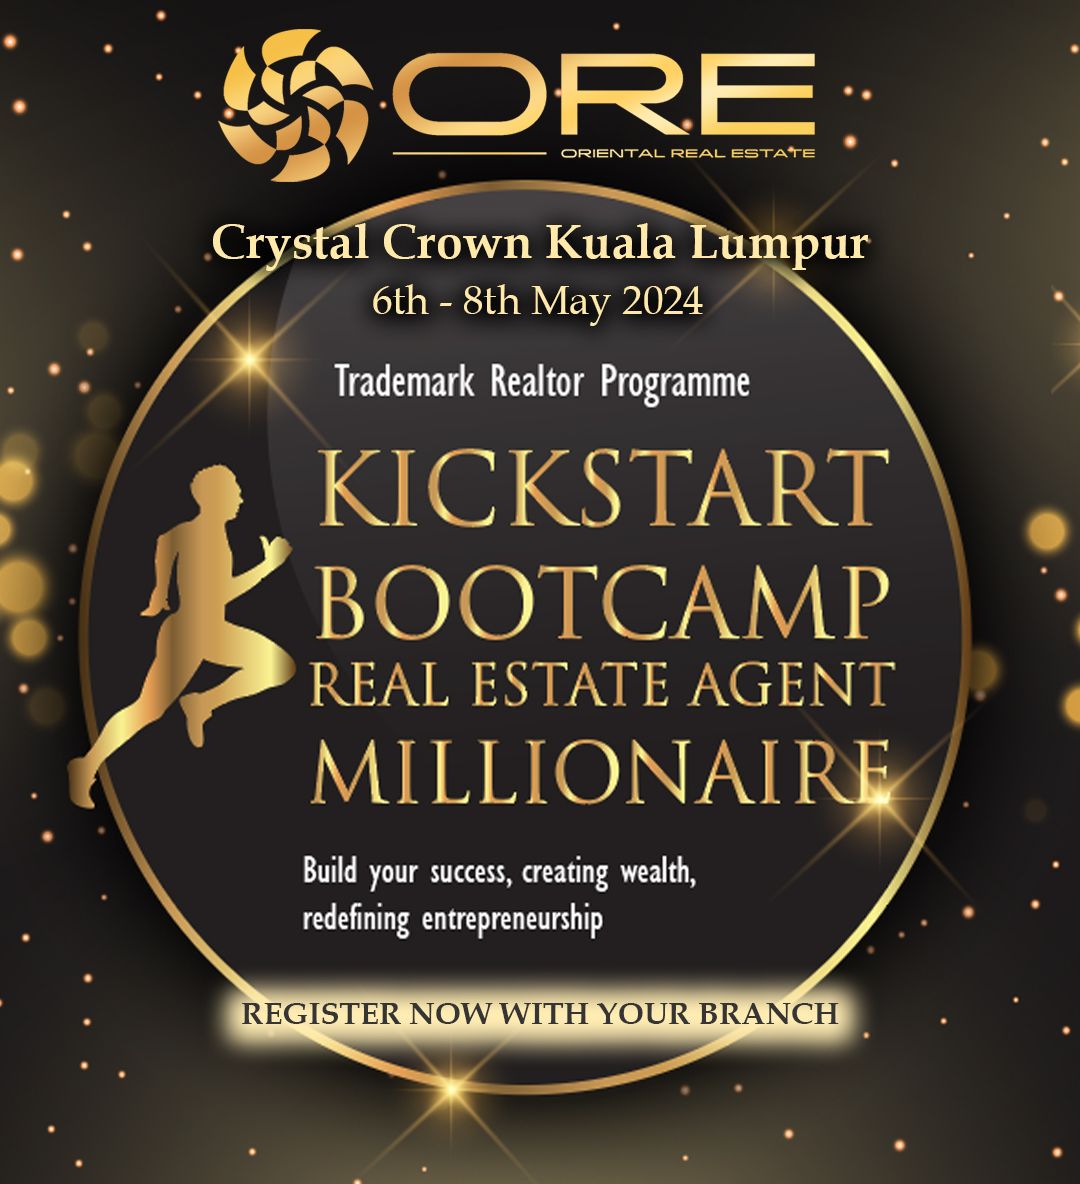 ORE - Kickstart Bootcamp for Real Estate Agent Millionaires